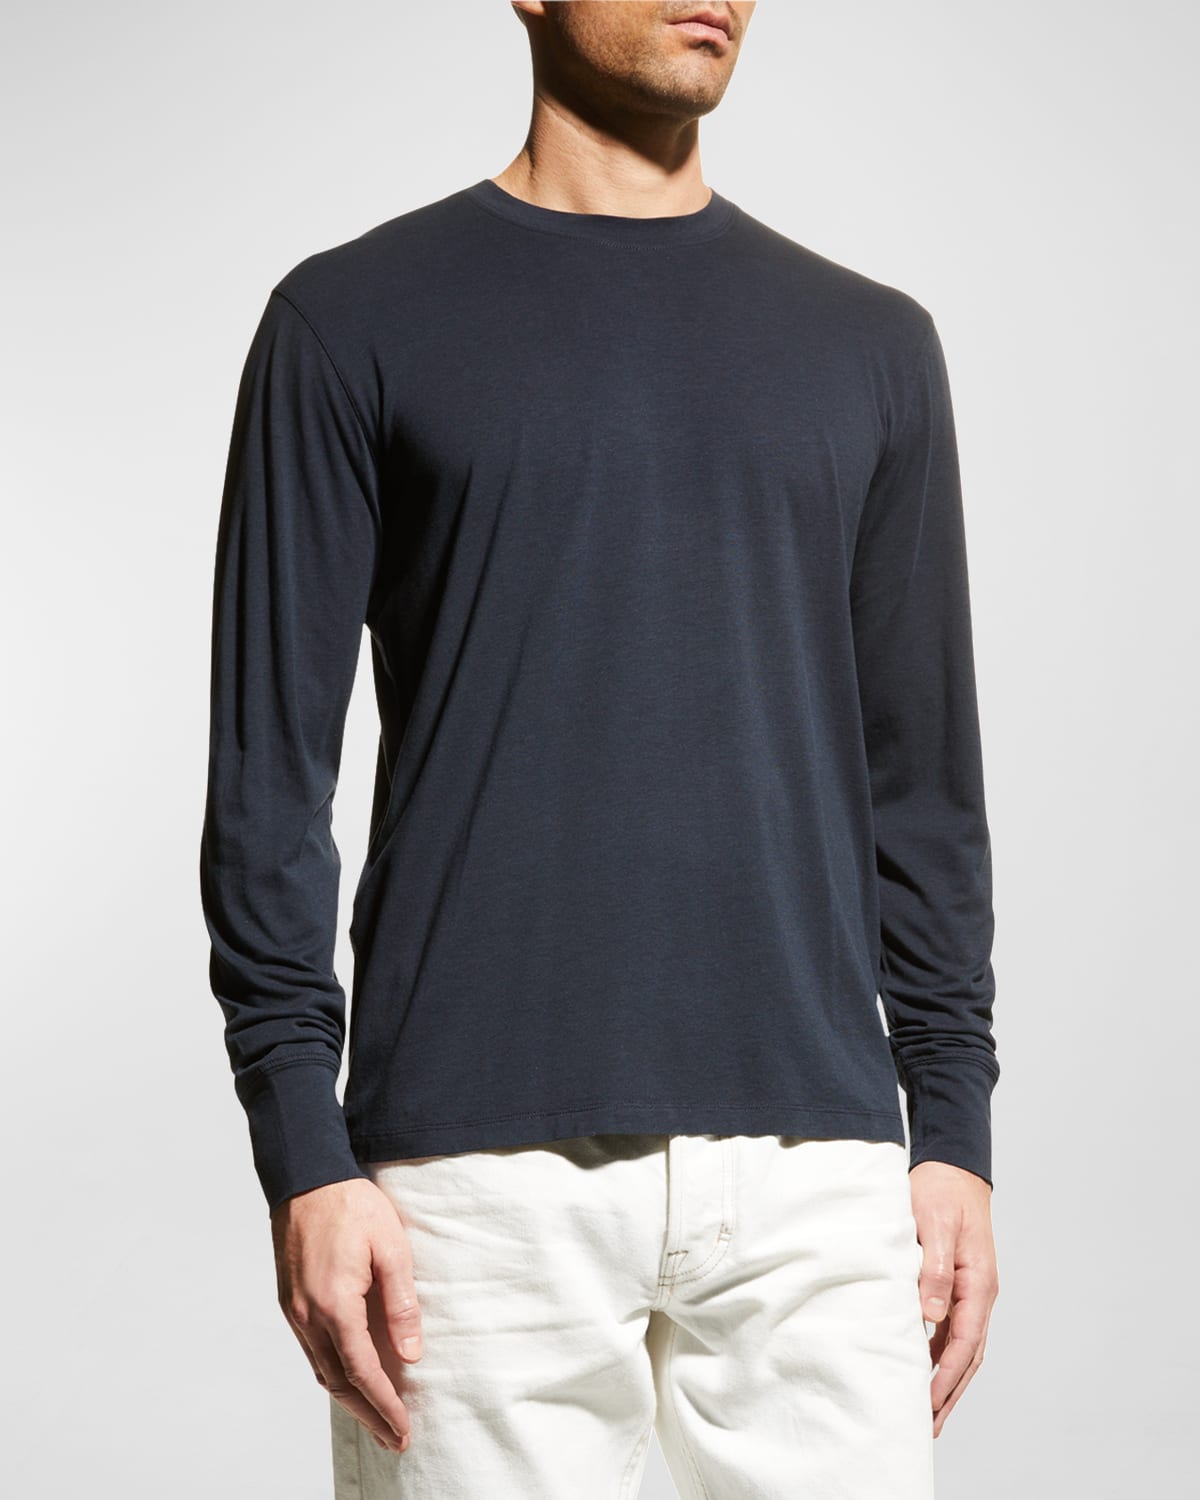 sandhed Distraktion Oxide Tom Ford Tshirt | Neiman Marcus